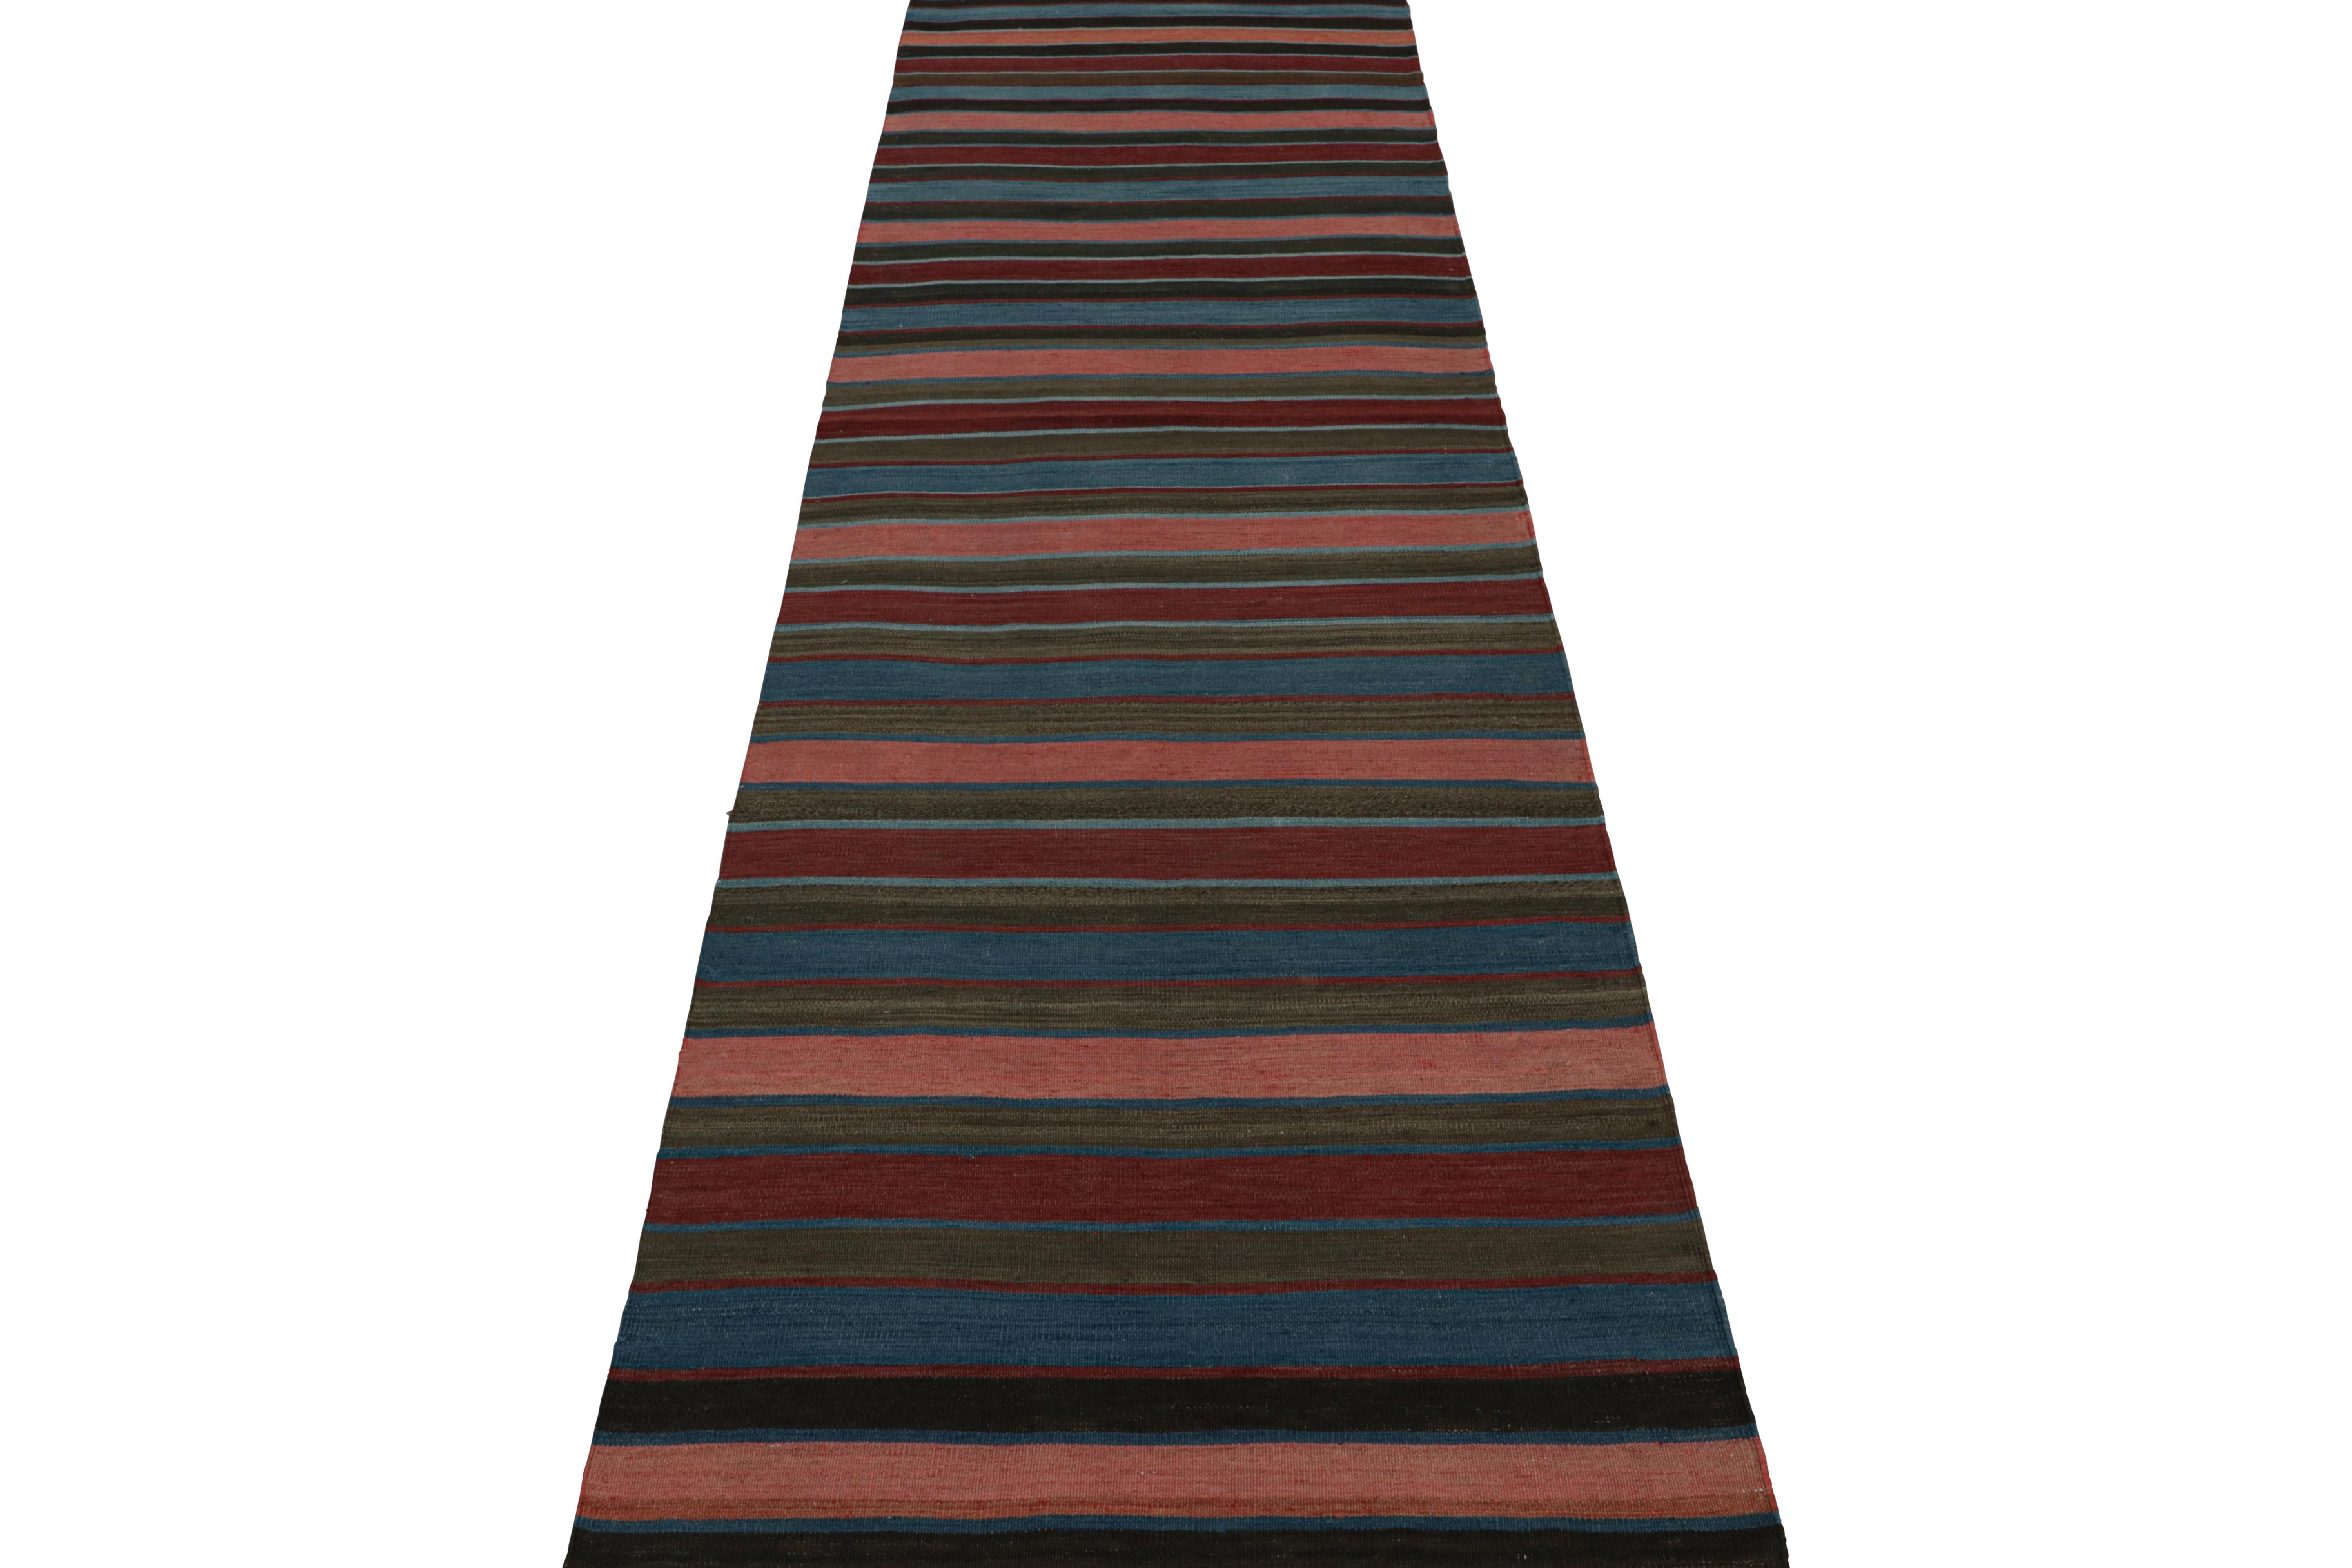 Tribal Vintage Afghani tribal Kilim runner rug, with Stripes, from Rug & Kilim For Sale